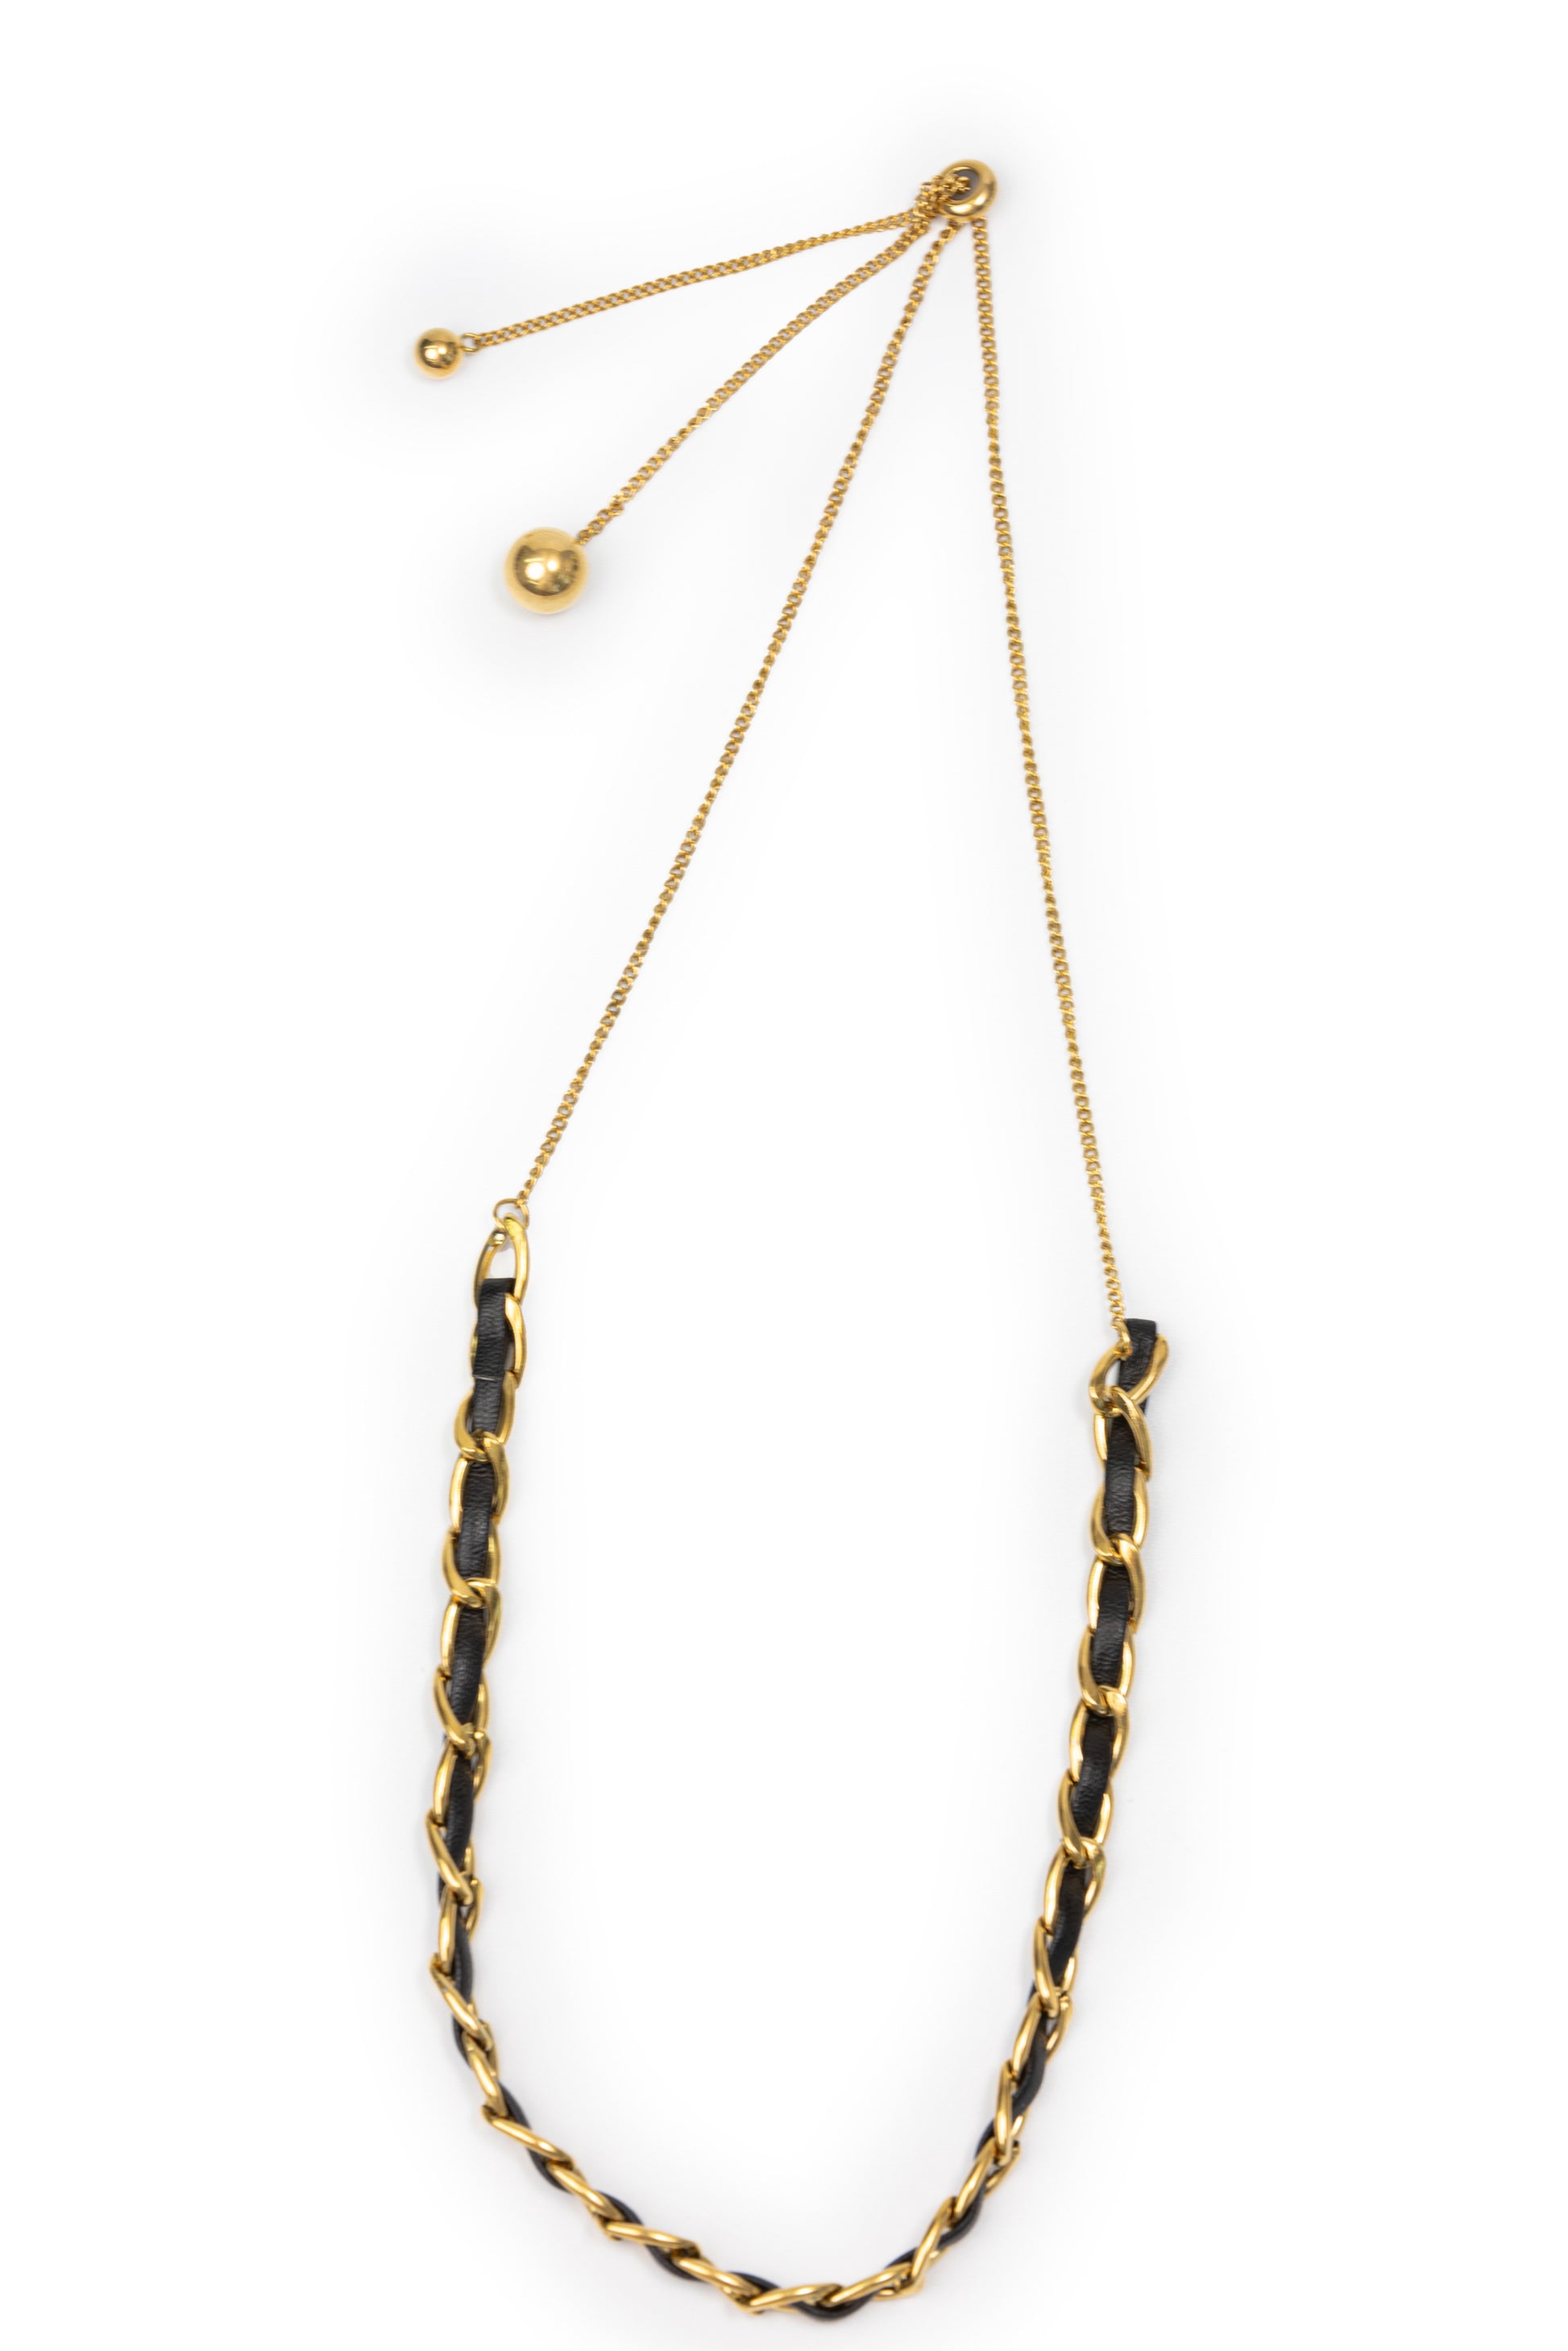 Planderful Golden Leather Necklace - Golden Necklace for Women